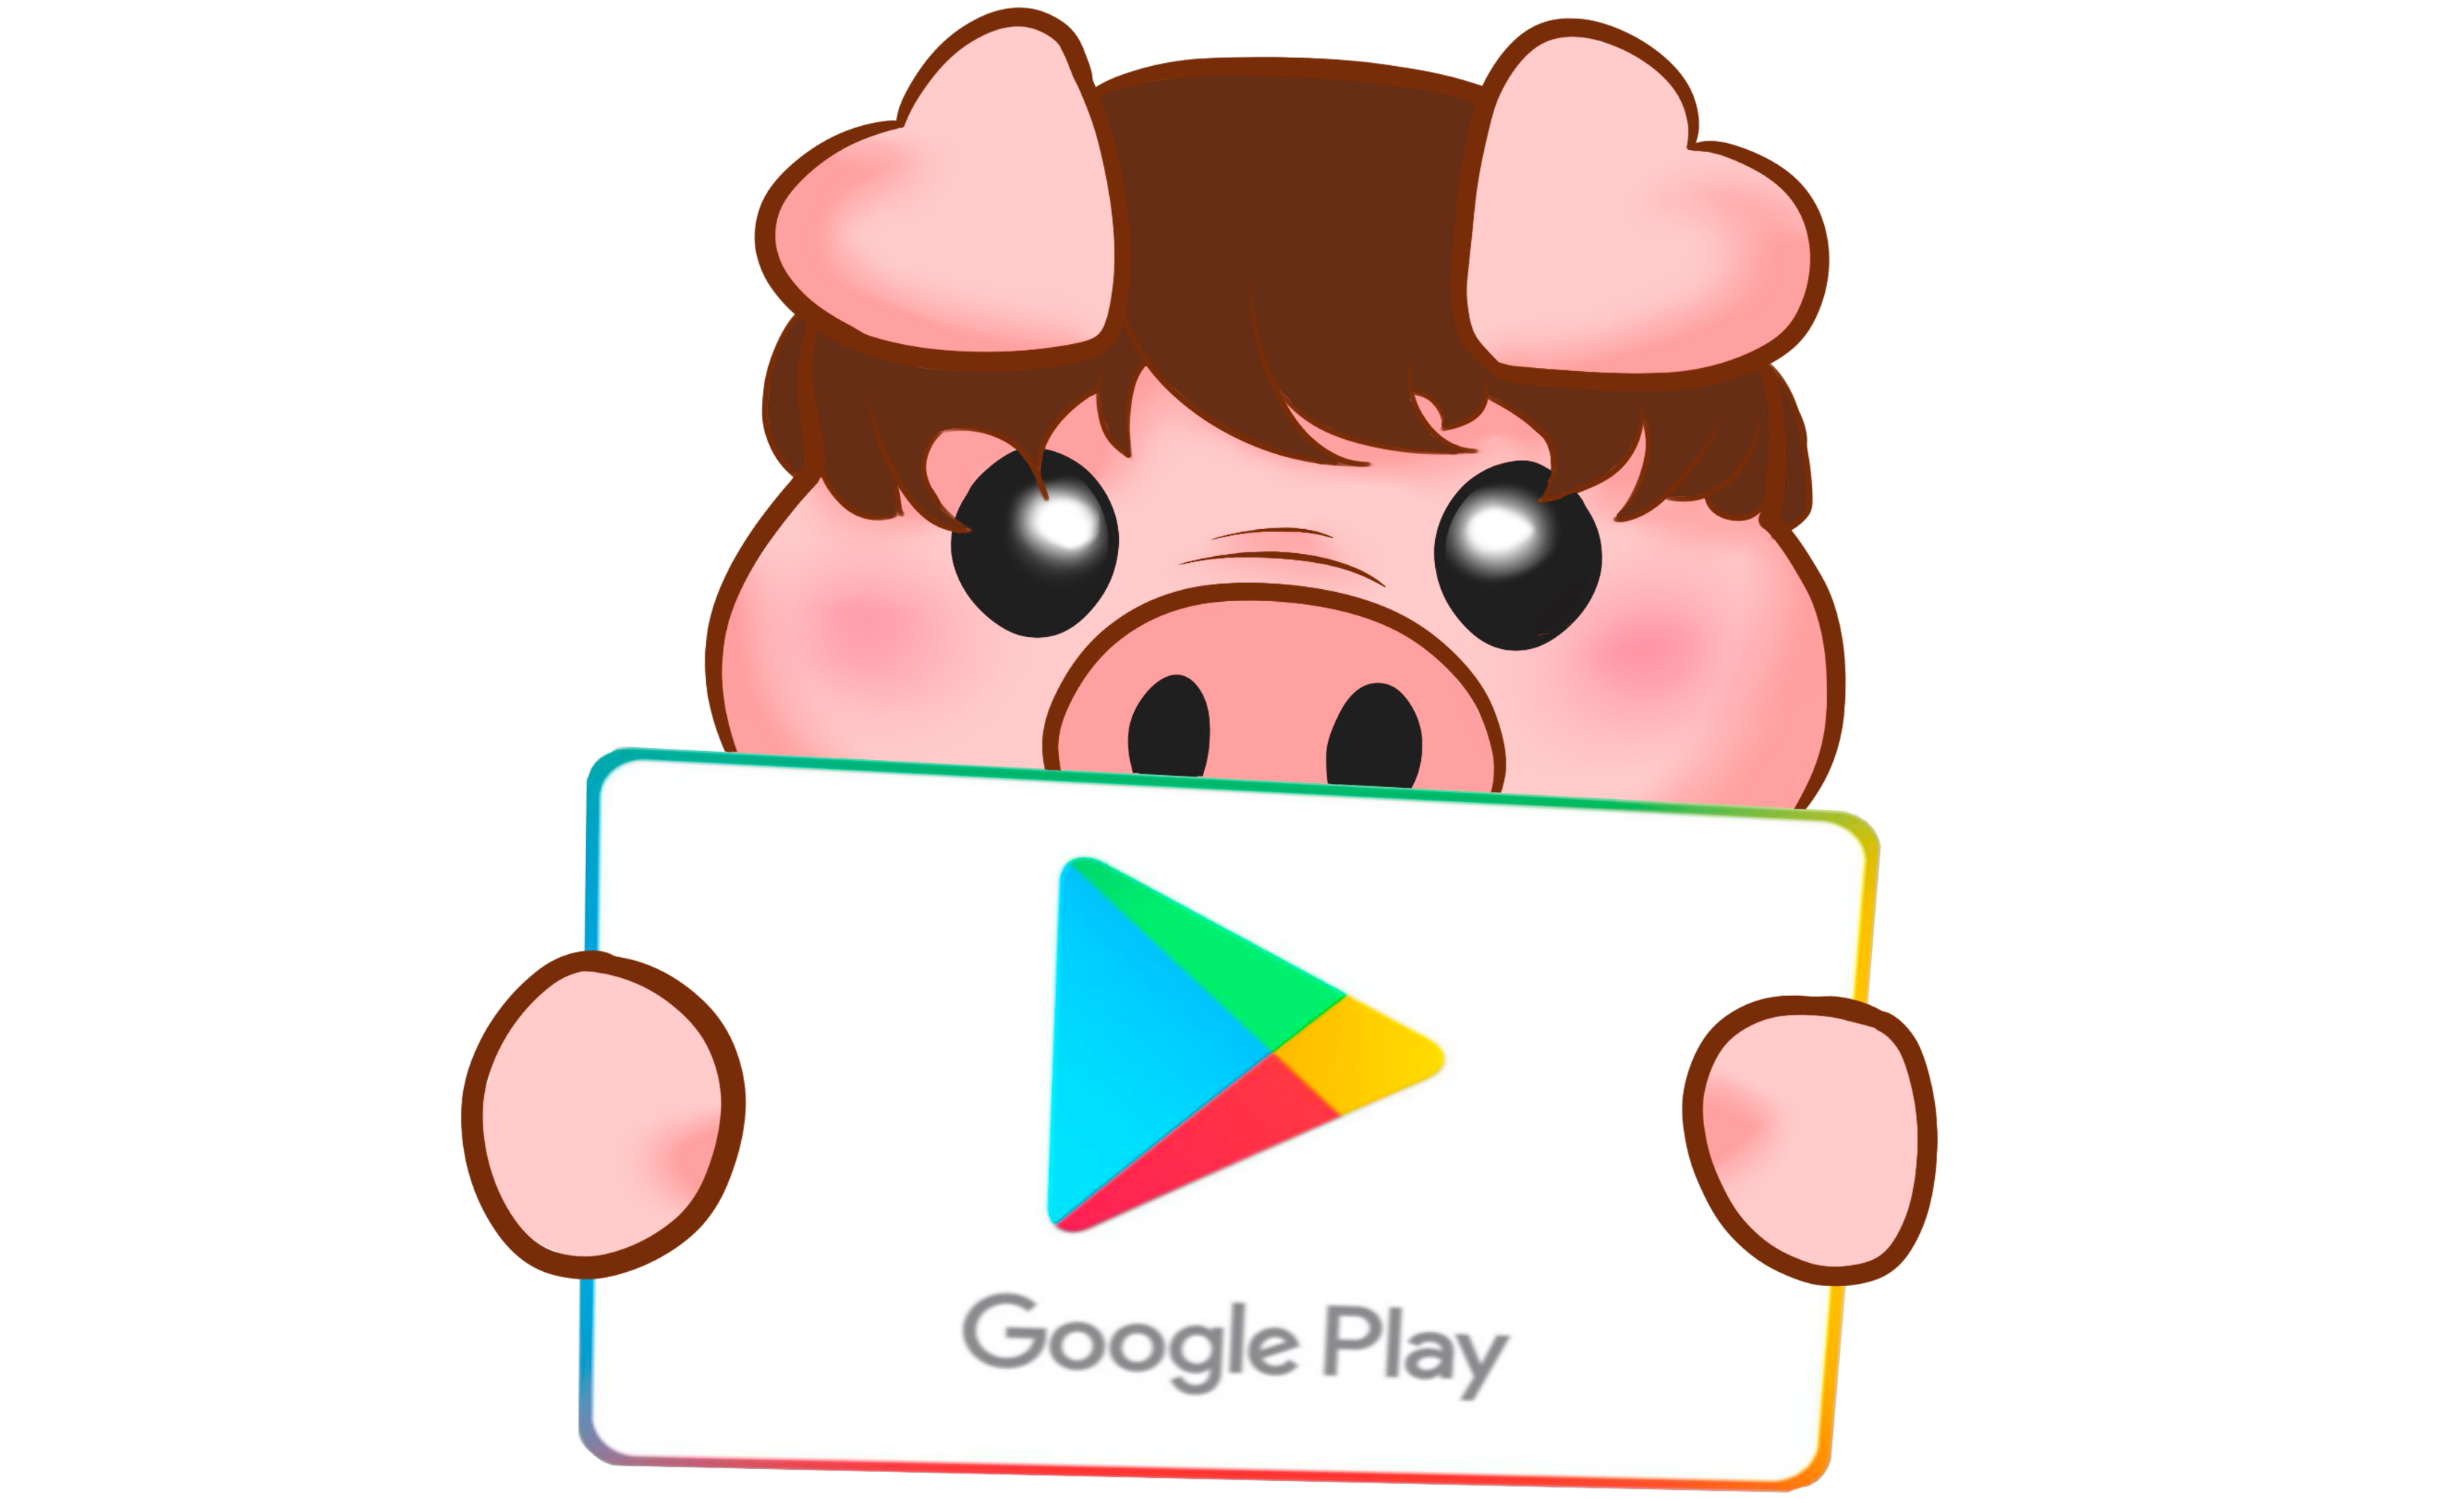 R$15 - Google Play